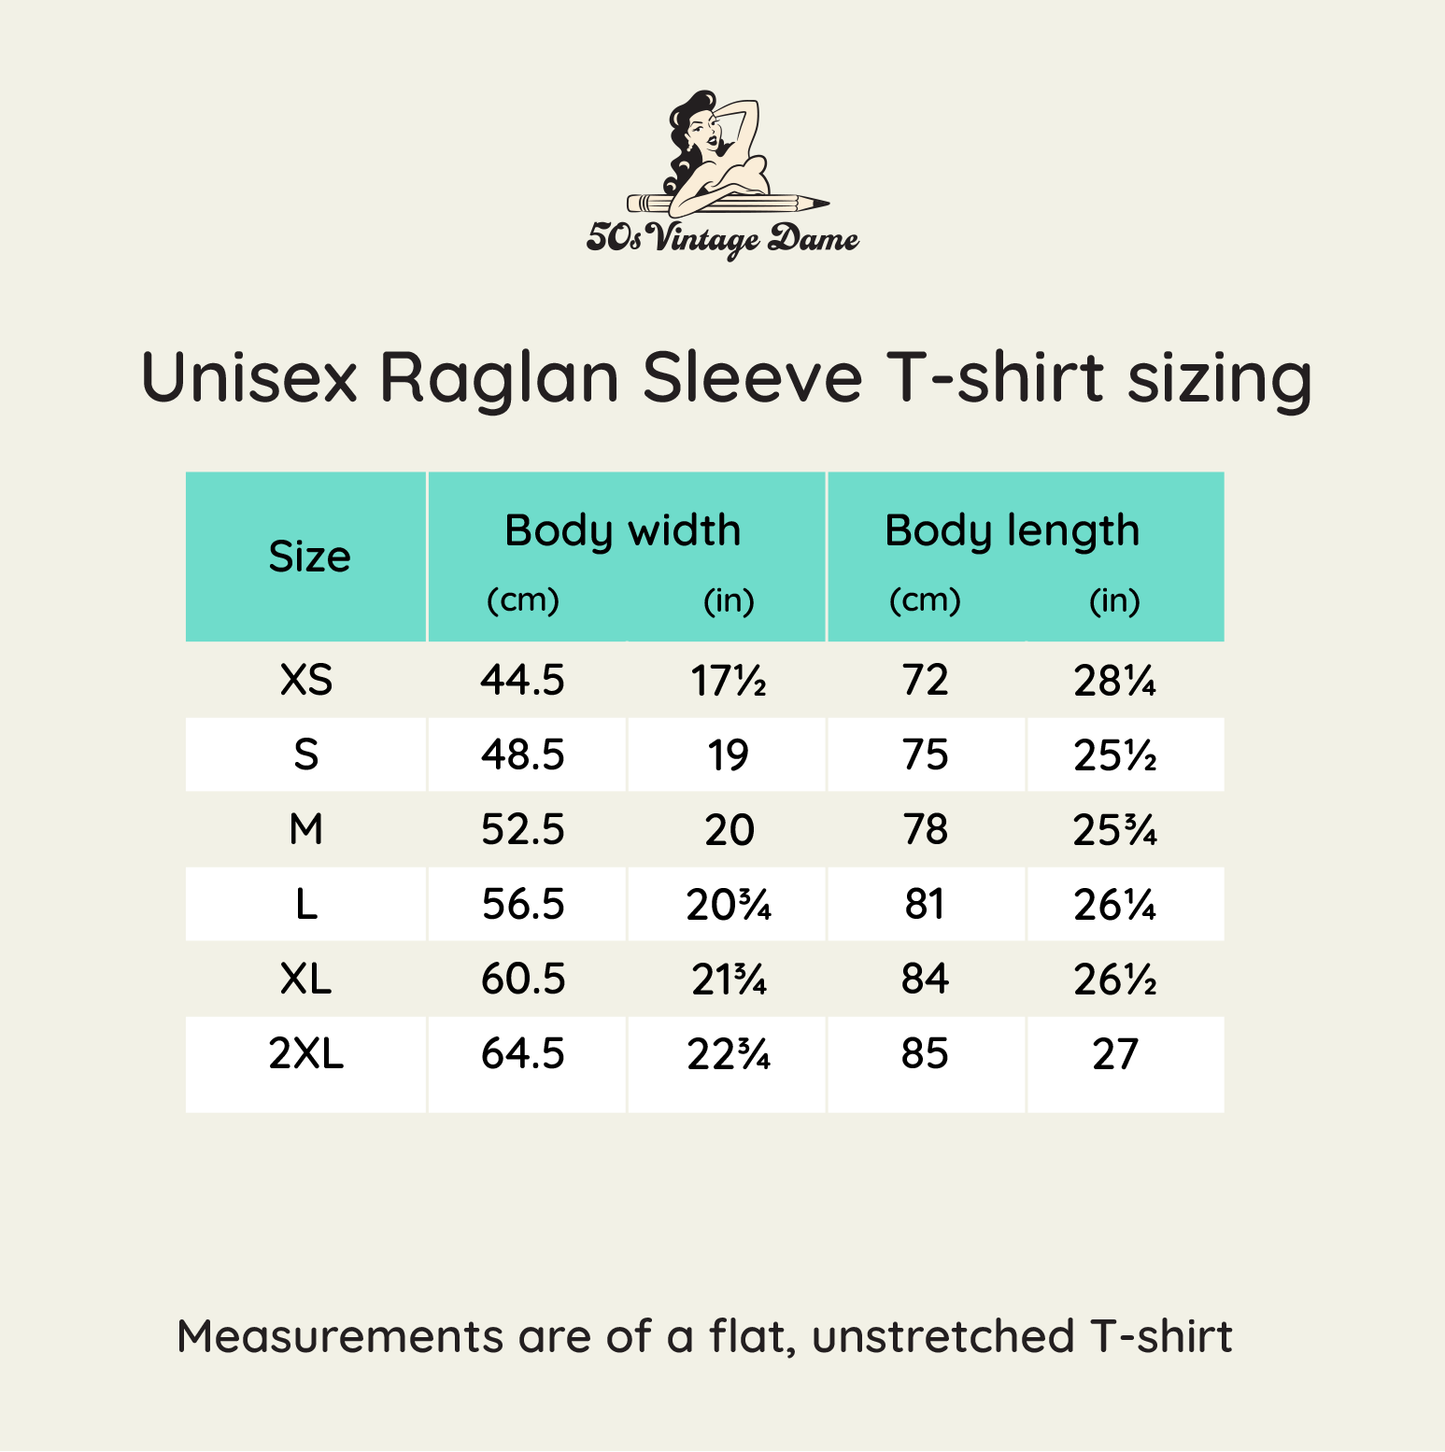 SS Minnow - 3/4 Sleeve T-Shirt